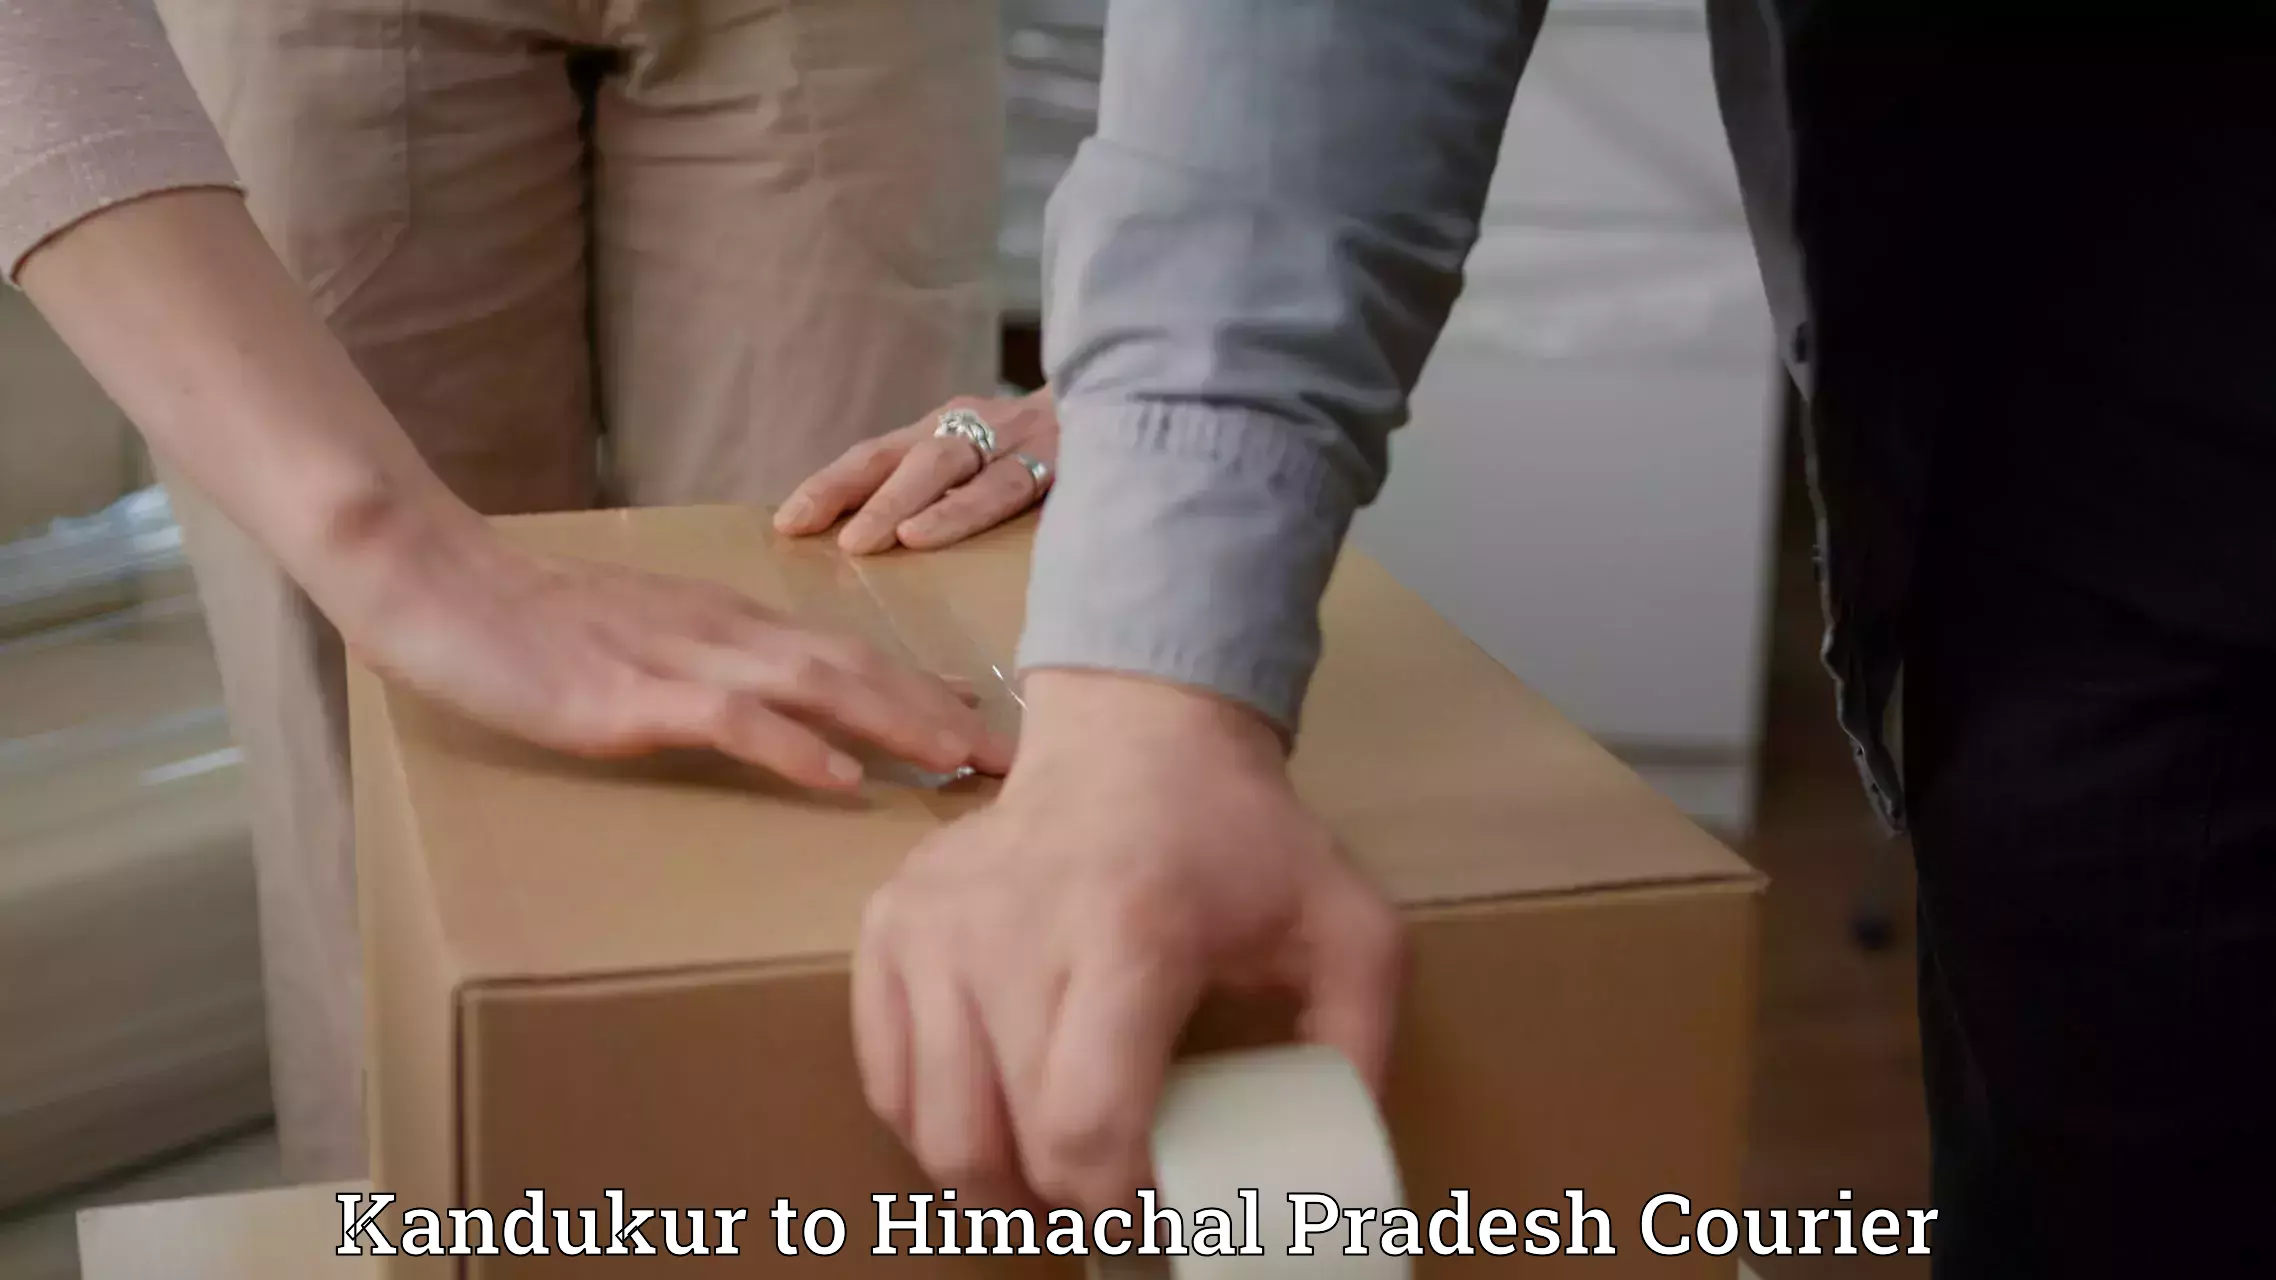 Courier service partnerships Kandukur to Himachal Pradesh